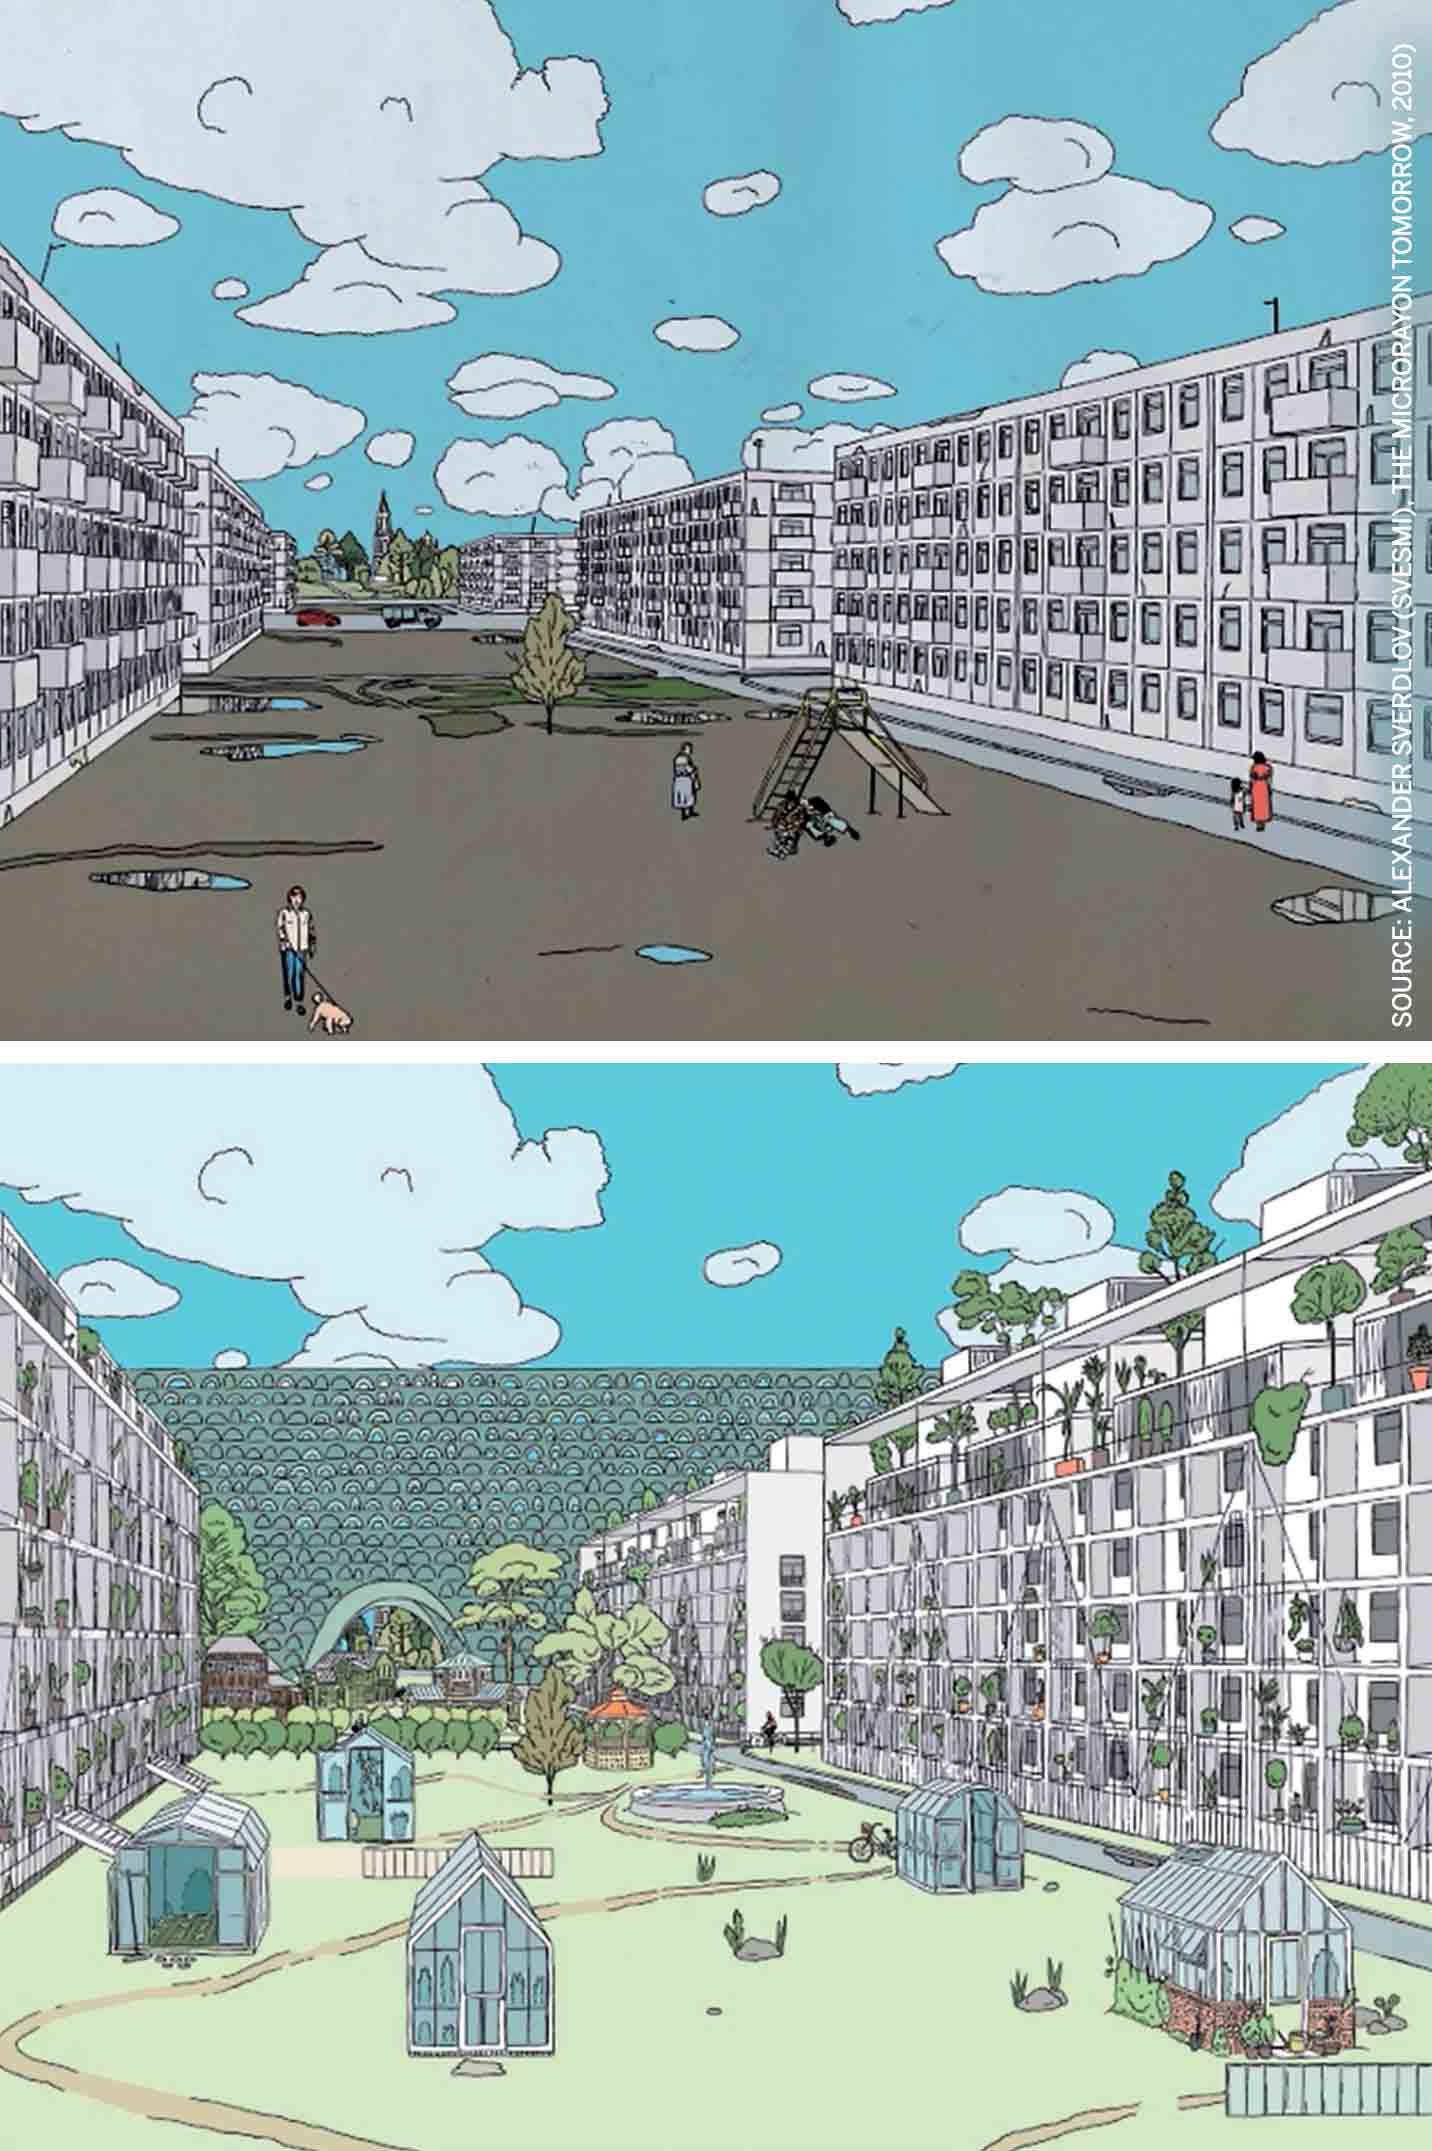 against-renovation-block-by-block-fight-neighbourhood-integrity-artists-renderings-original-rehabilitated-micro-rayon